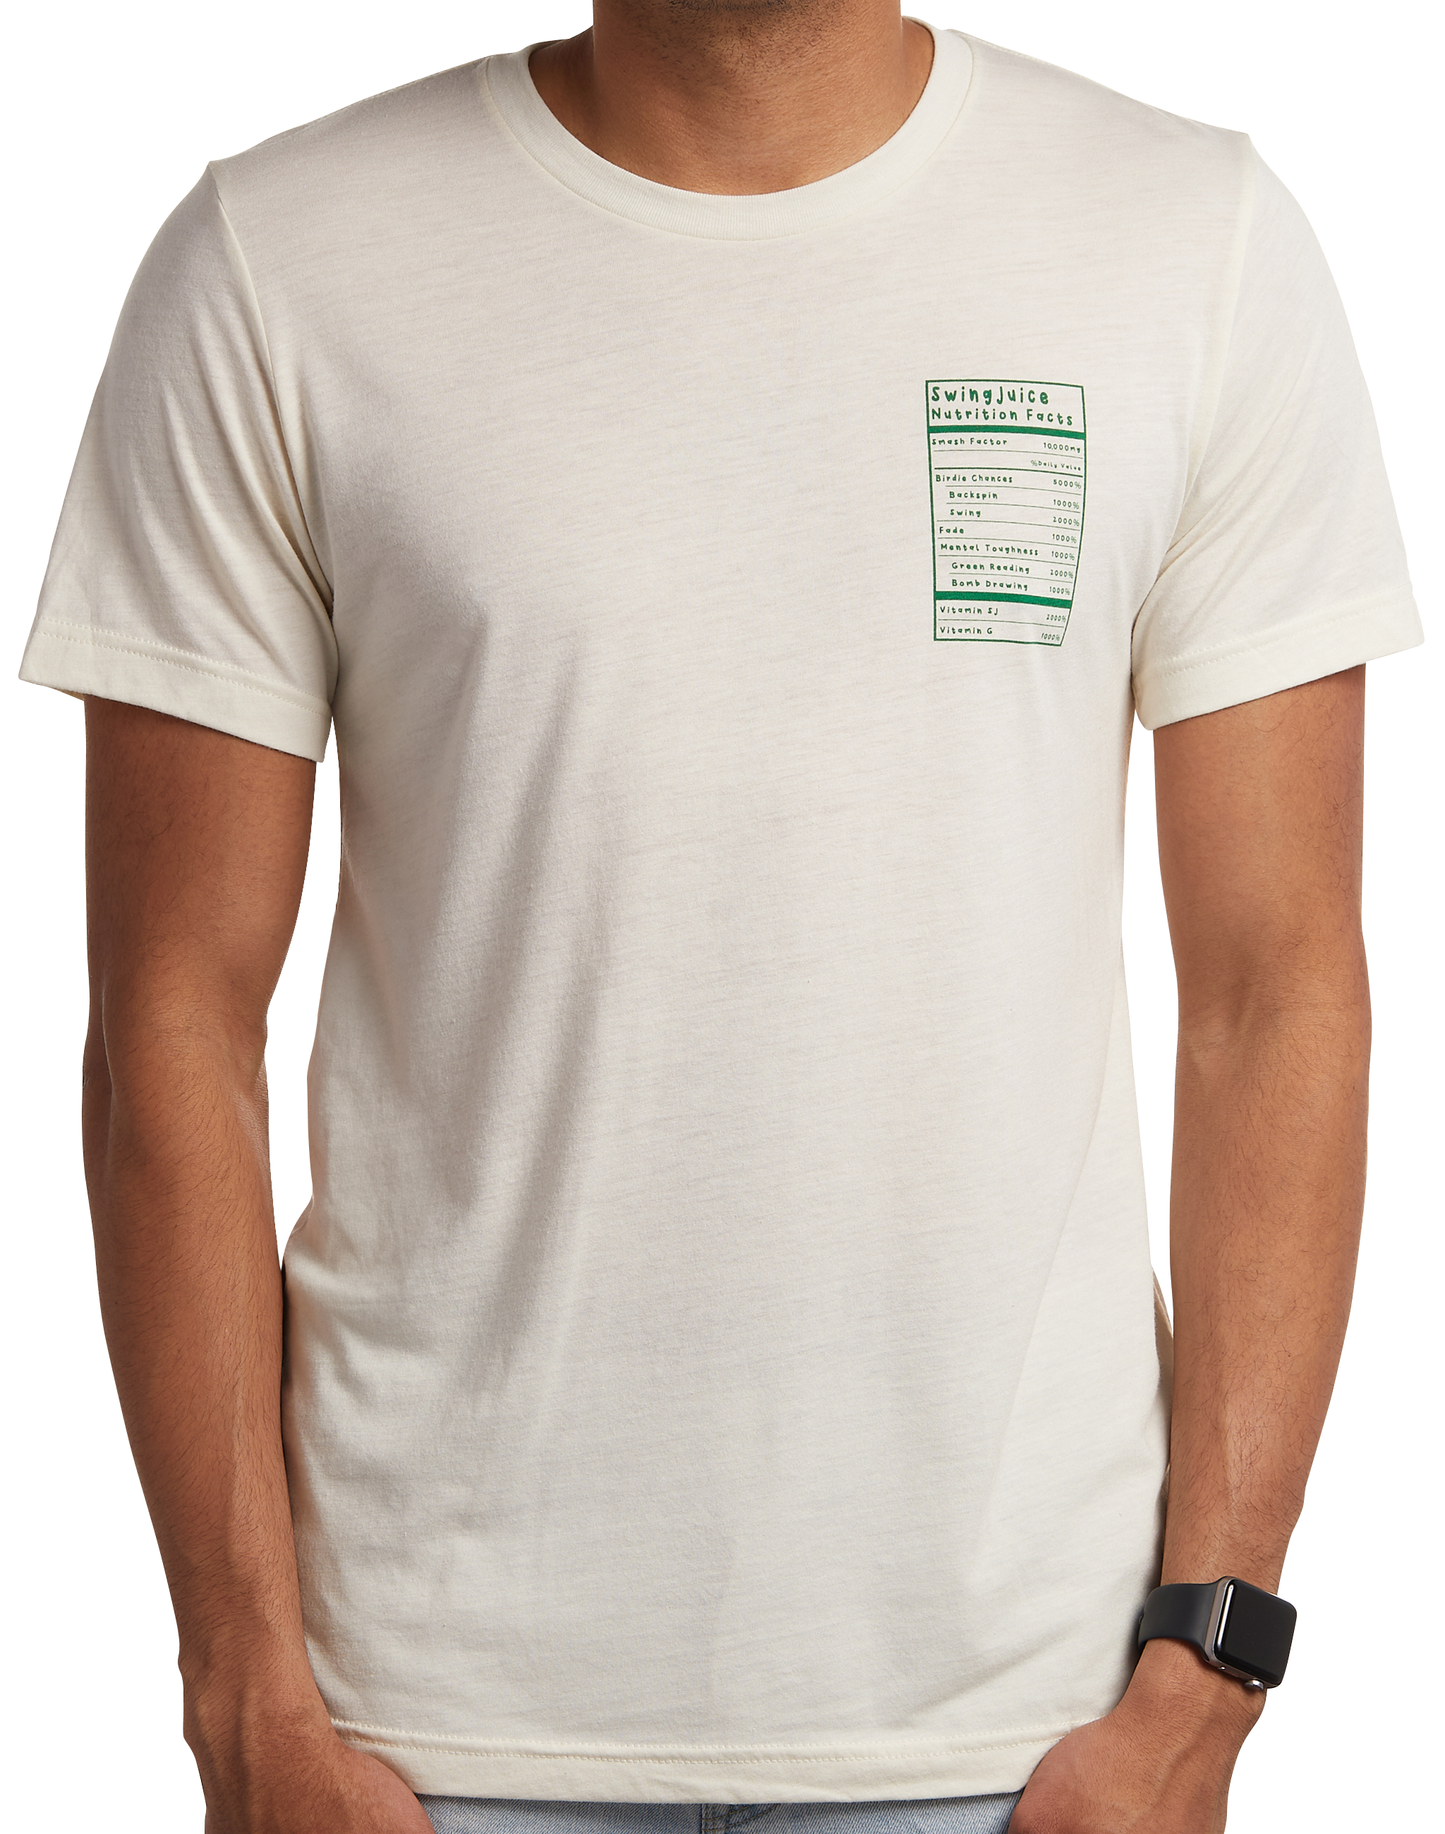 Golf Juice Box Front & Back Unisex T-shirt-Natural